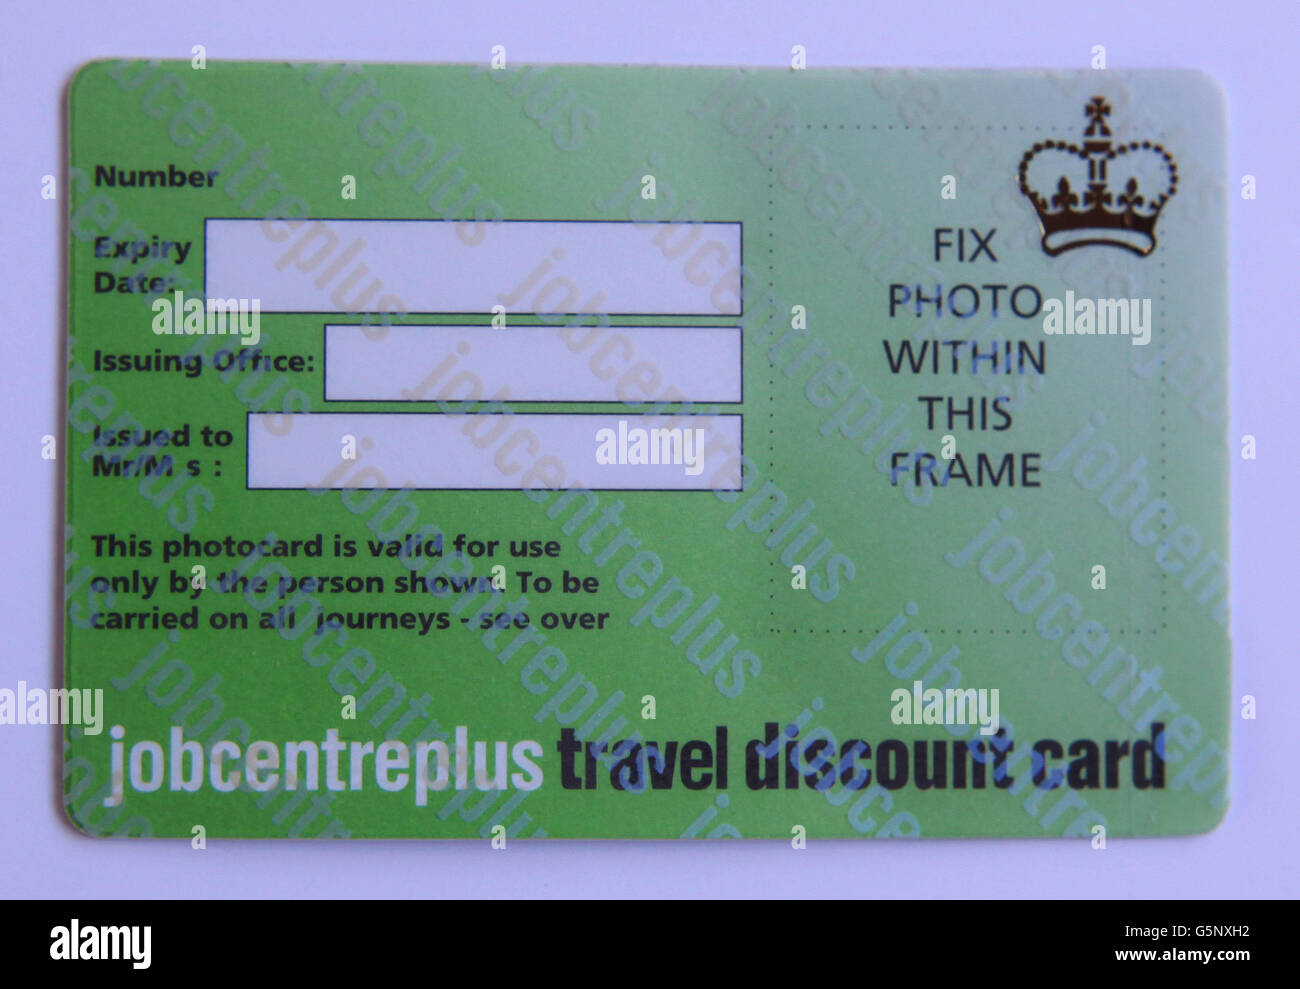 jobcentre plus travel discount card application form